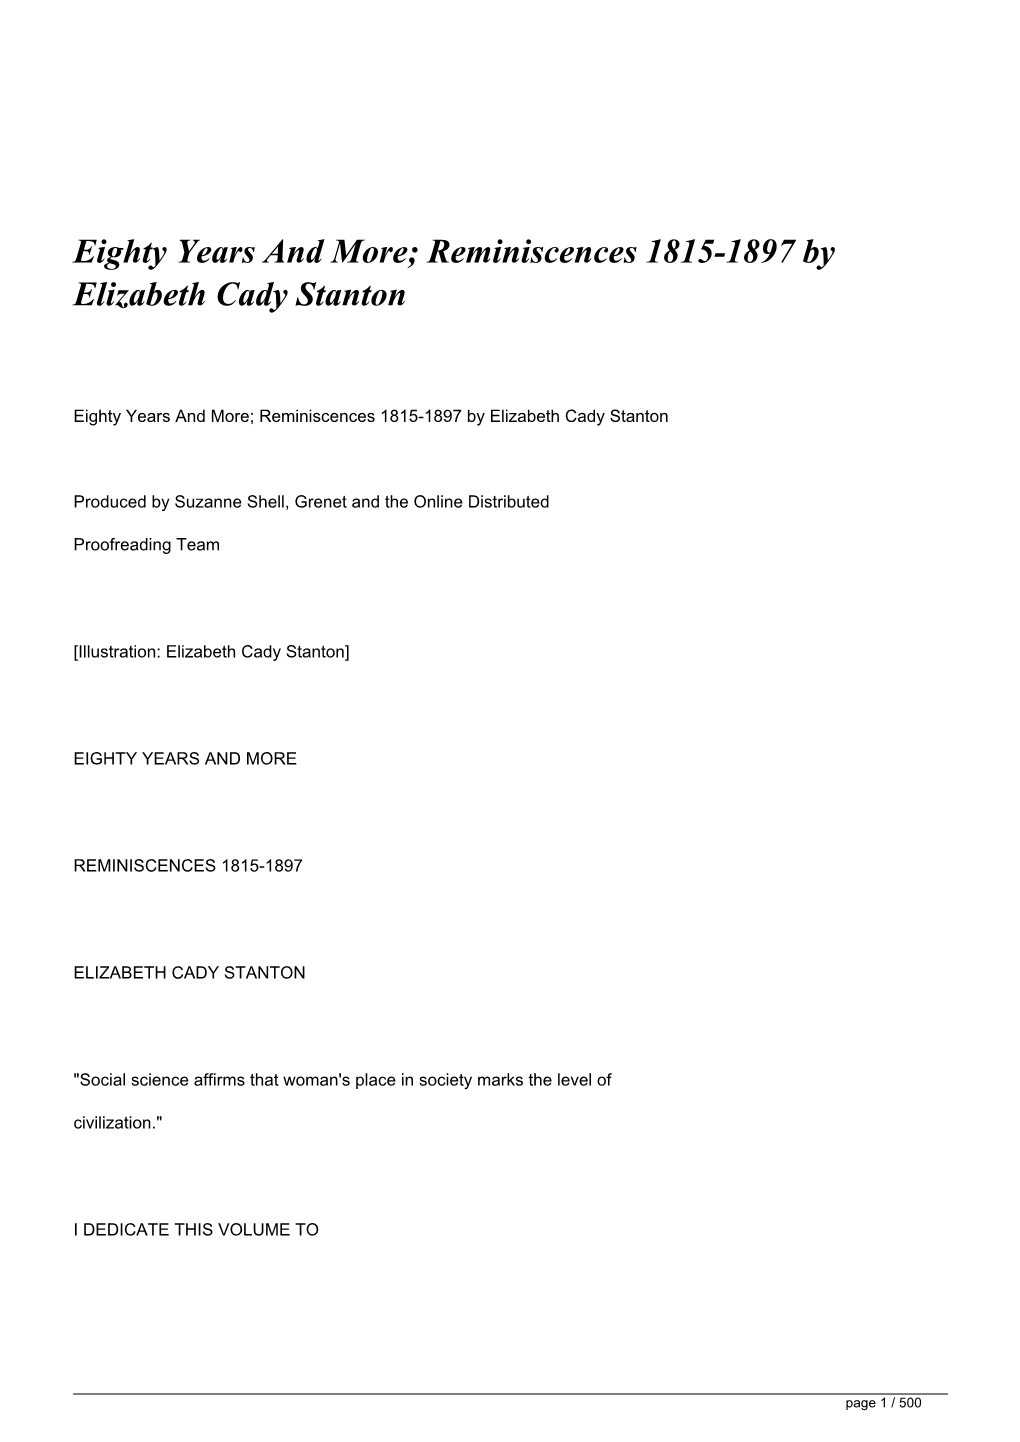 Reminiscences 1815-1897 by Elizabeth Cady Stanton&lt;/H1&gt;